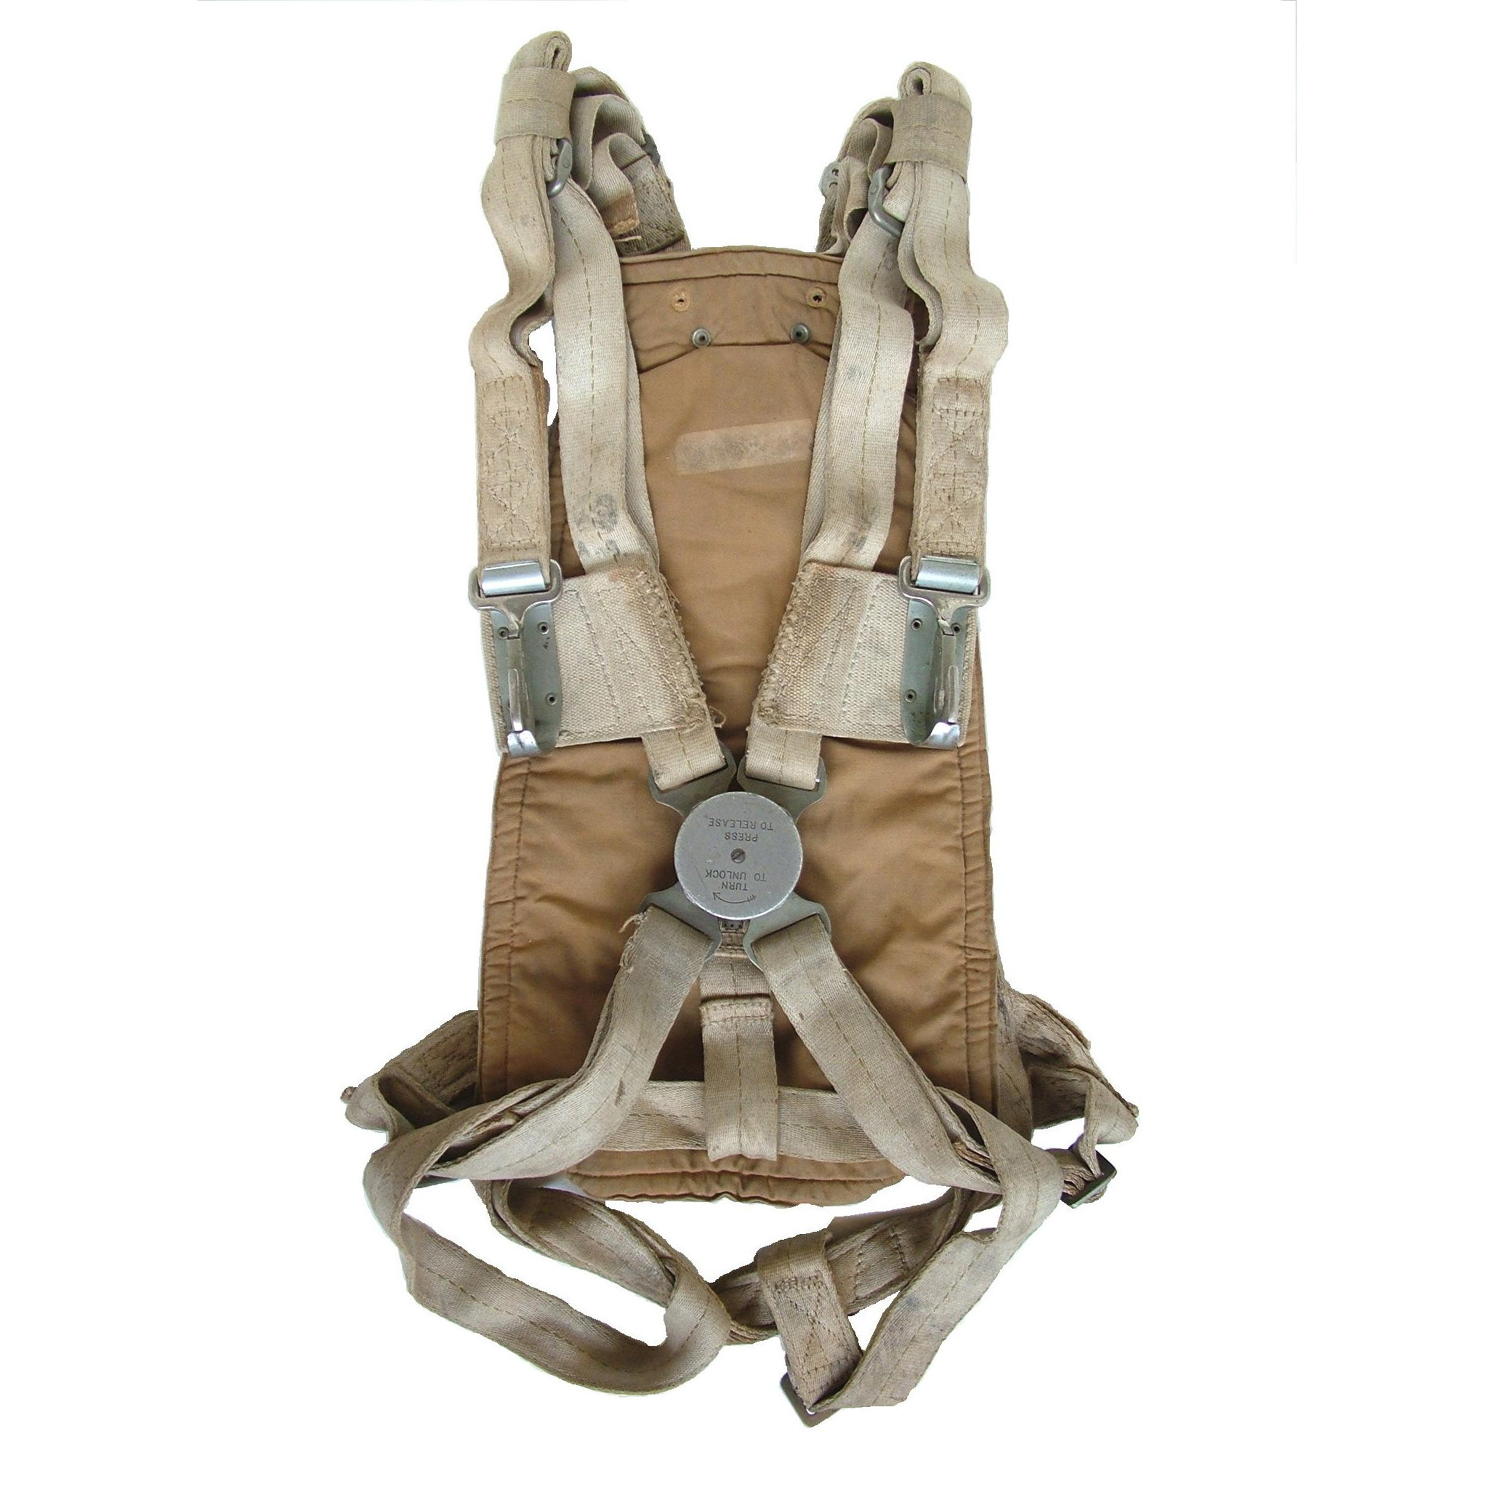 RAF Observer type parachute harness